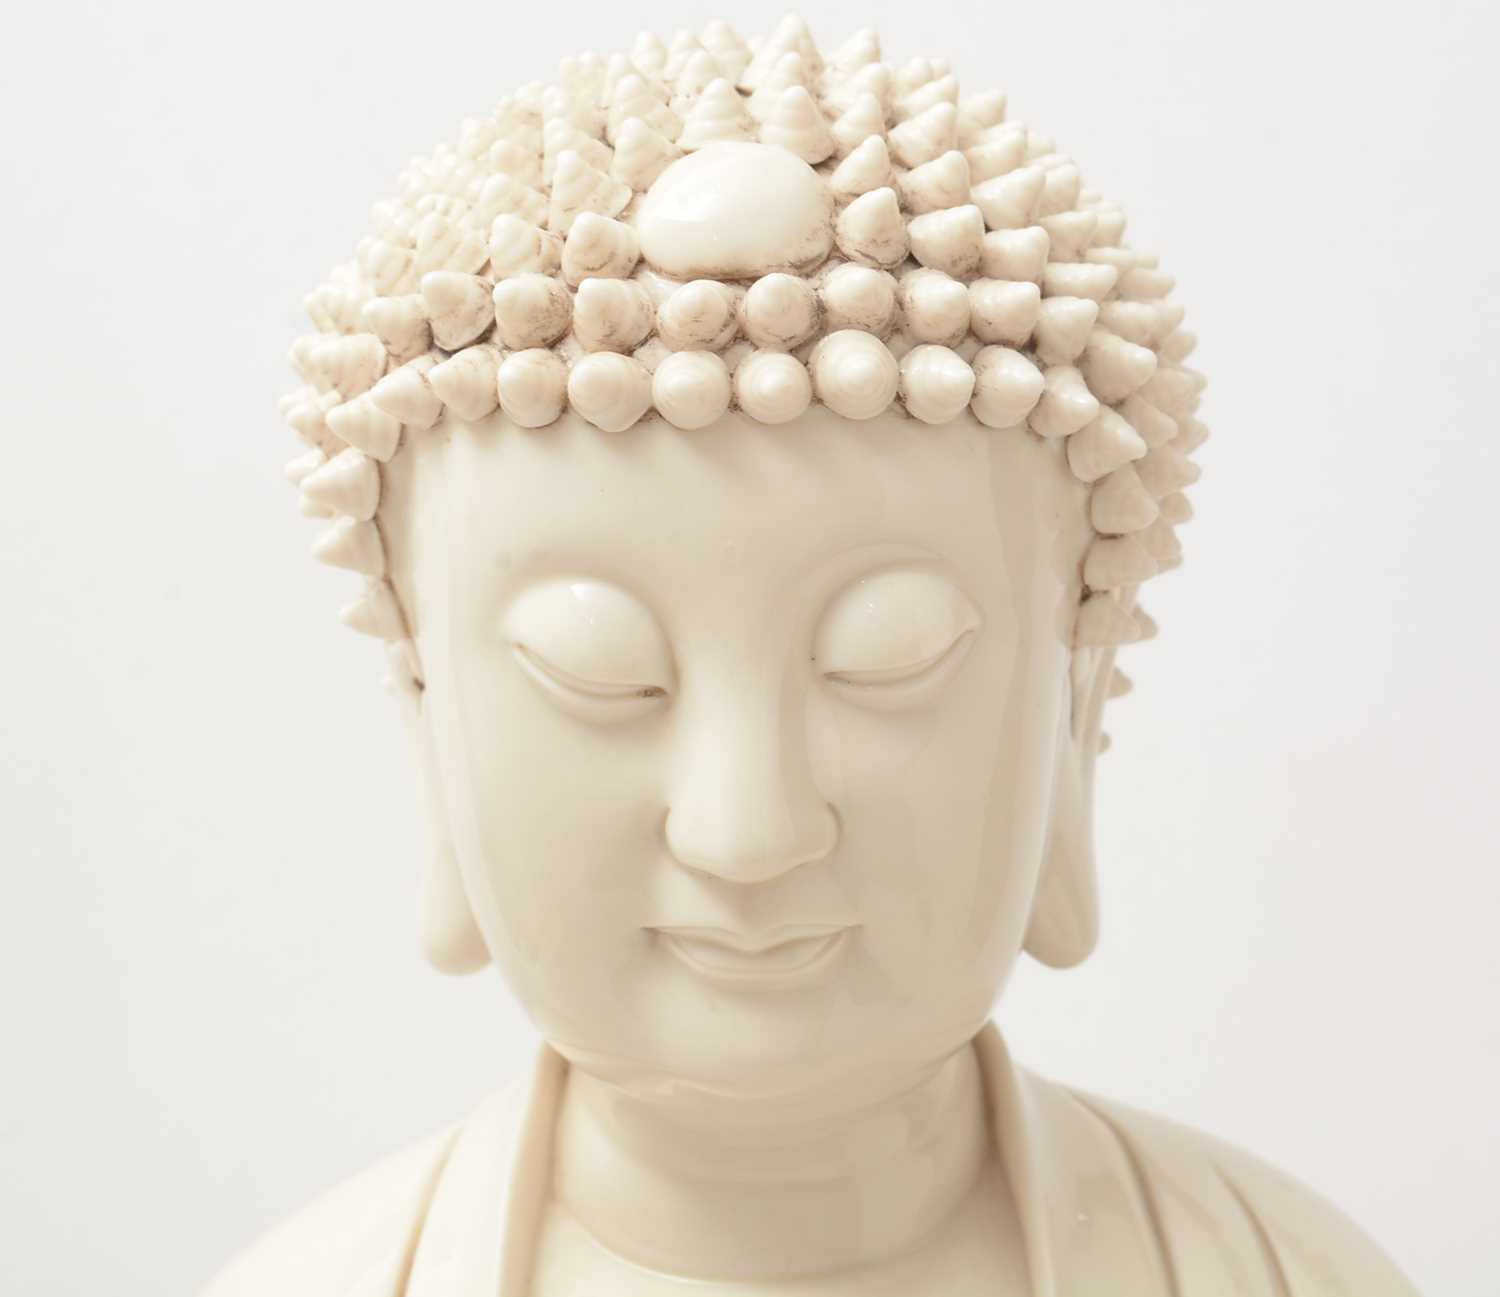 Large blanc de chine style figure Buddha, Bronzed figure and tiger - Image 12 of 23